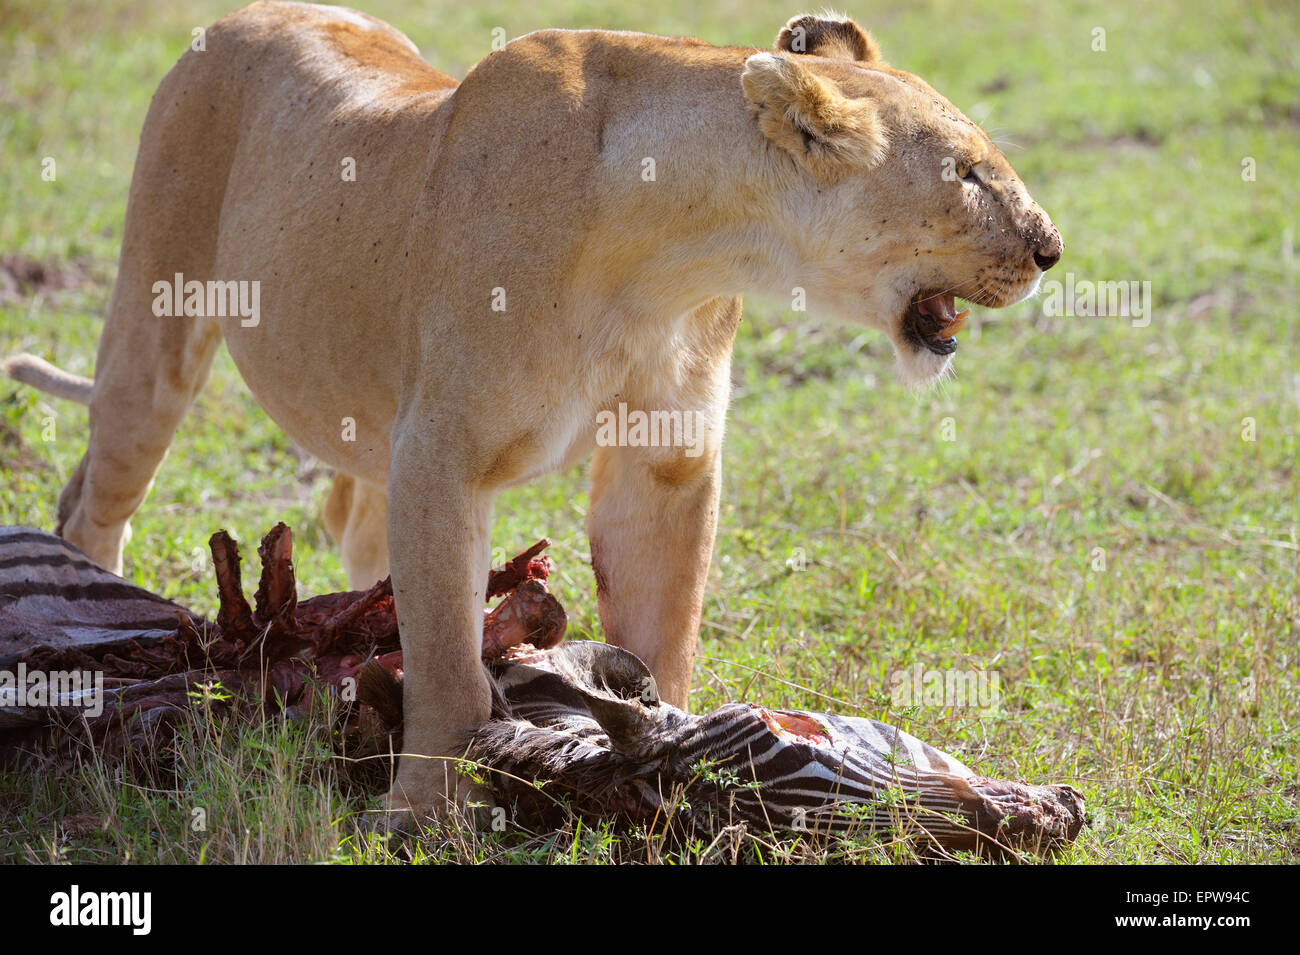 Lioness (Panthera leo) with a zebra carcass, Maasai Mara National Reserve, Kenya Stock Photo